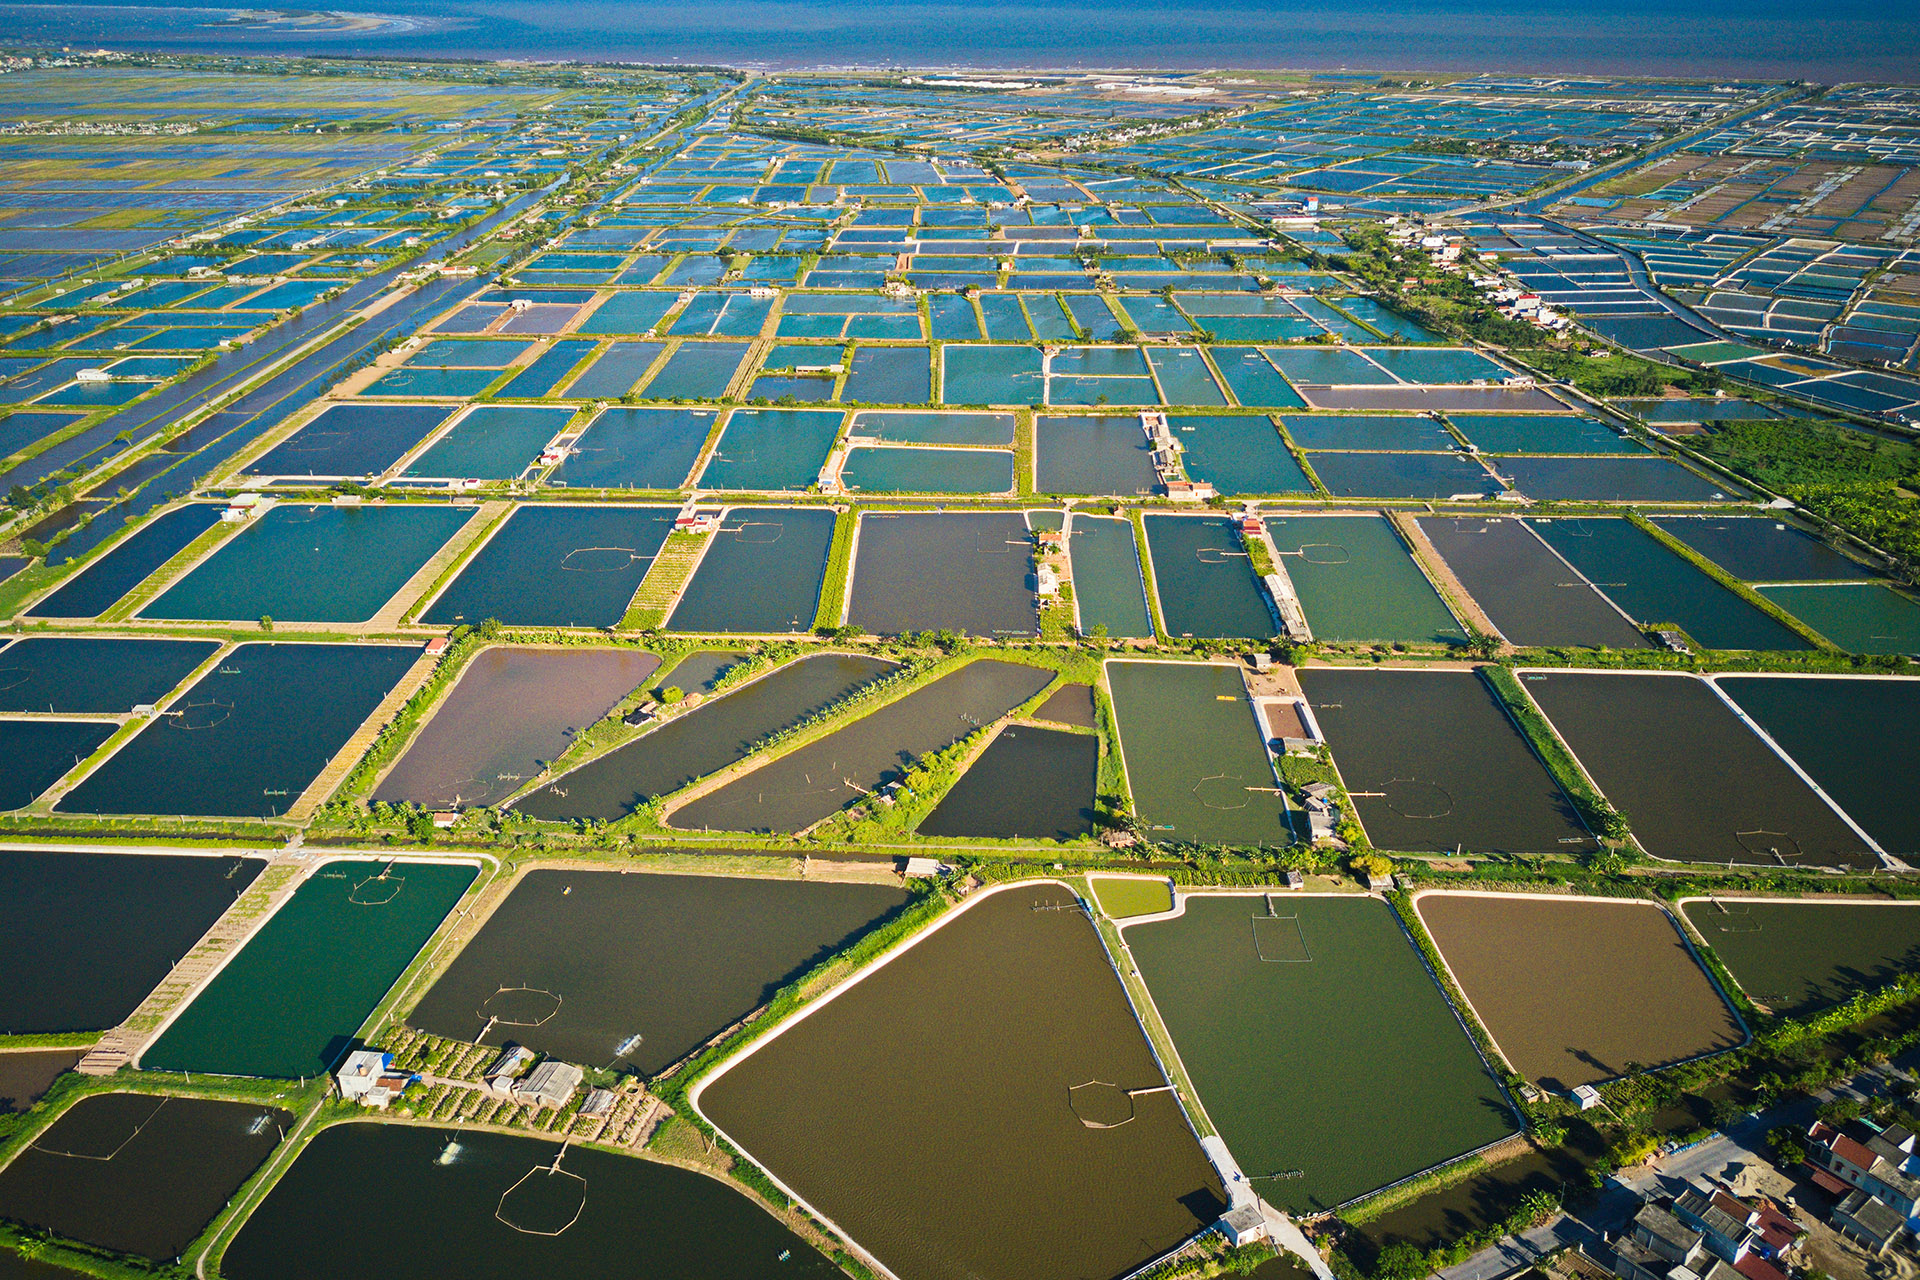 Aerial image of shrimp breeding farms in Giao Thuy, Vietnam